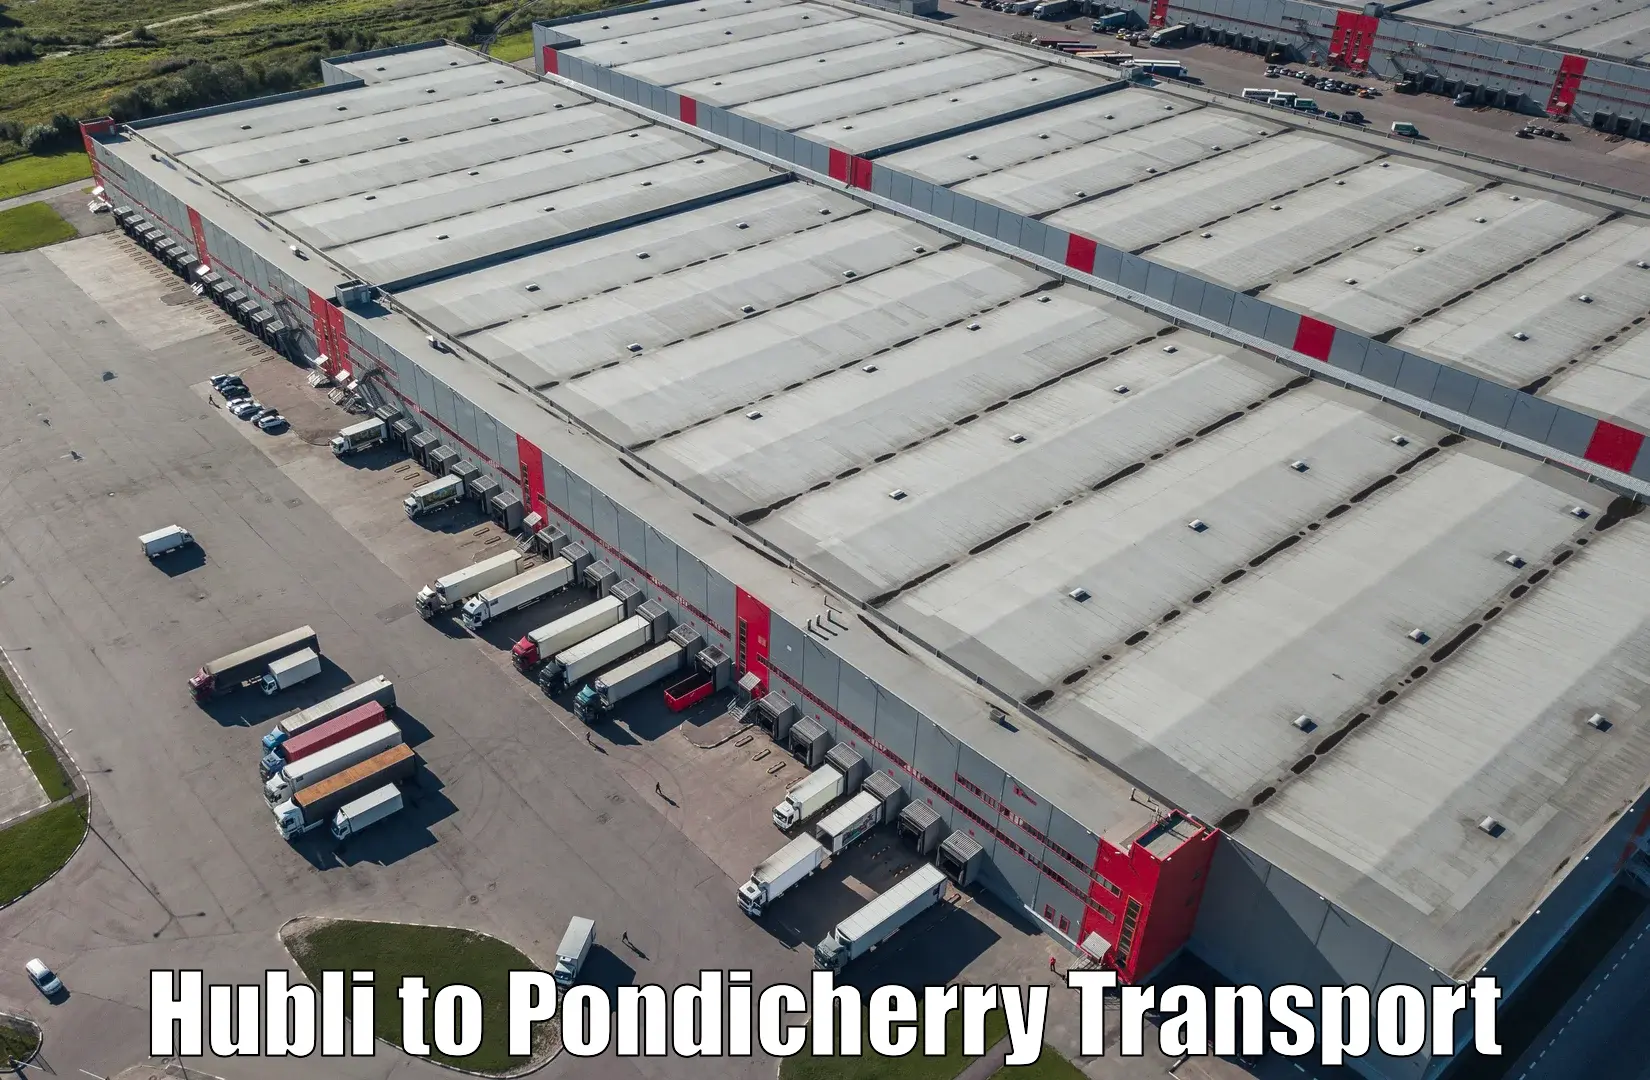 Online transport service Hubli to Pondicherry